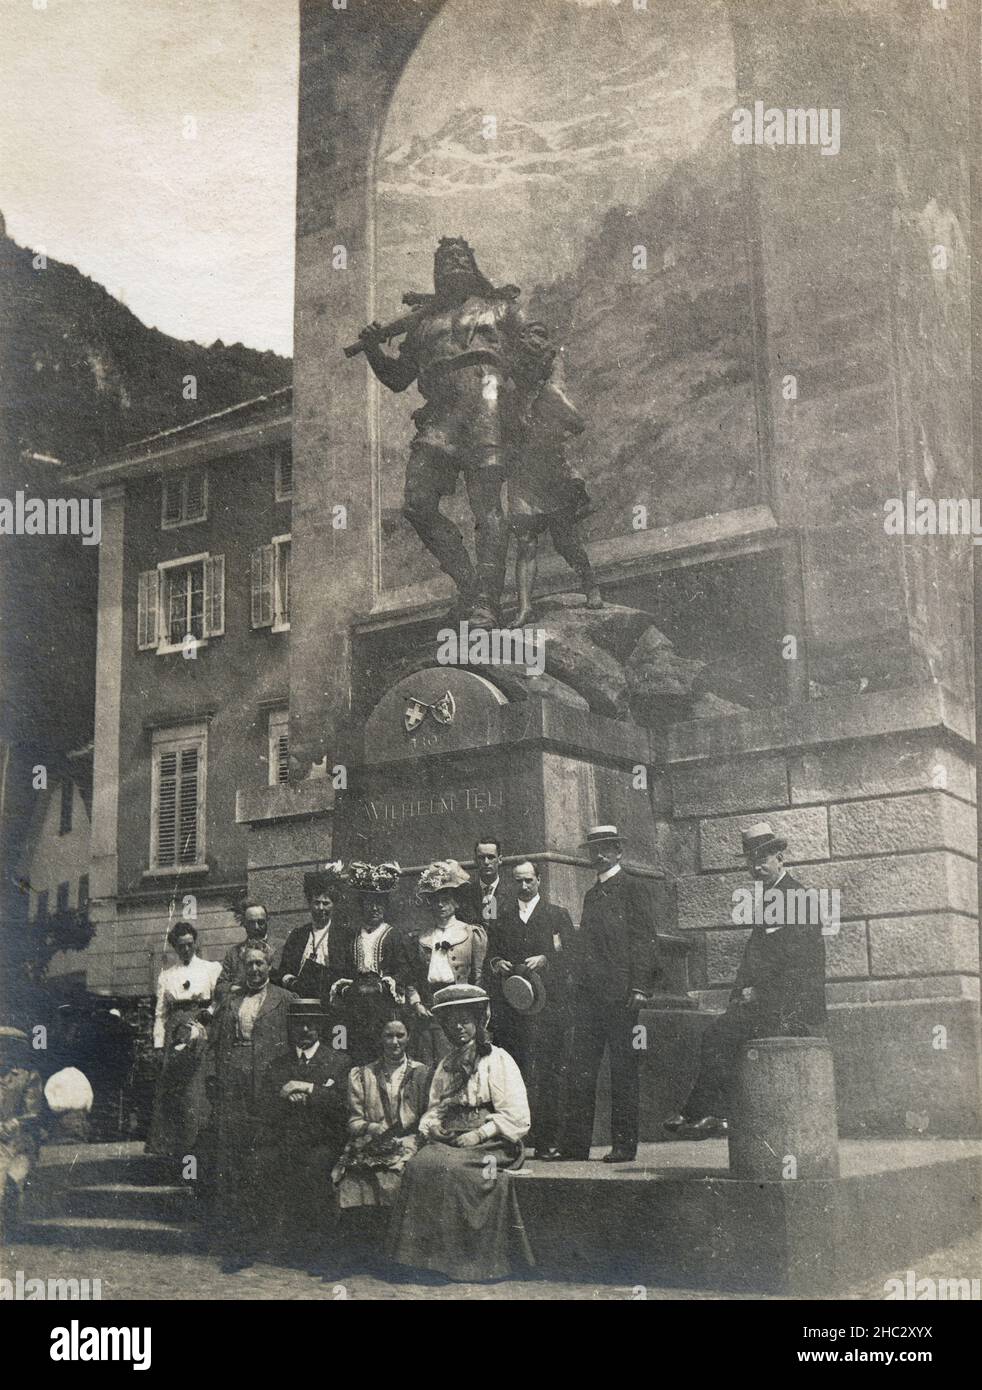 Antique c1900 photograph, Tell Monument in the market place of Altdorf, Canton of Uri, Switzerland. SOURCE: ORIGINAL PHOTOGRAPHIC PRINT Stock Photo